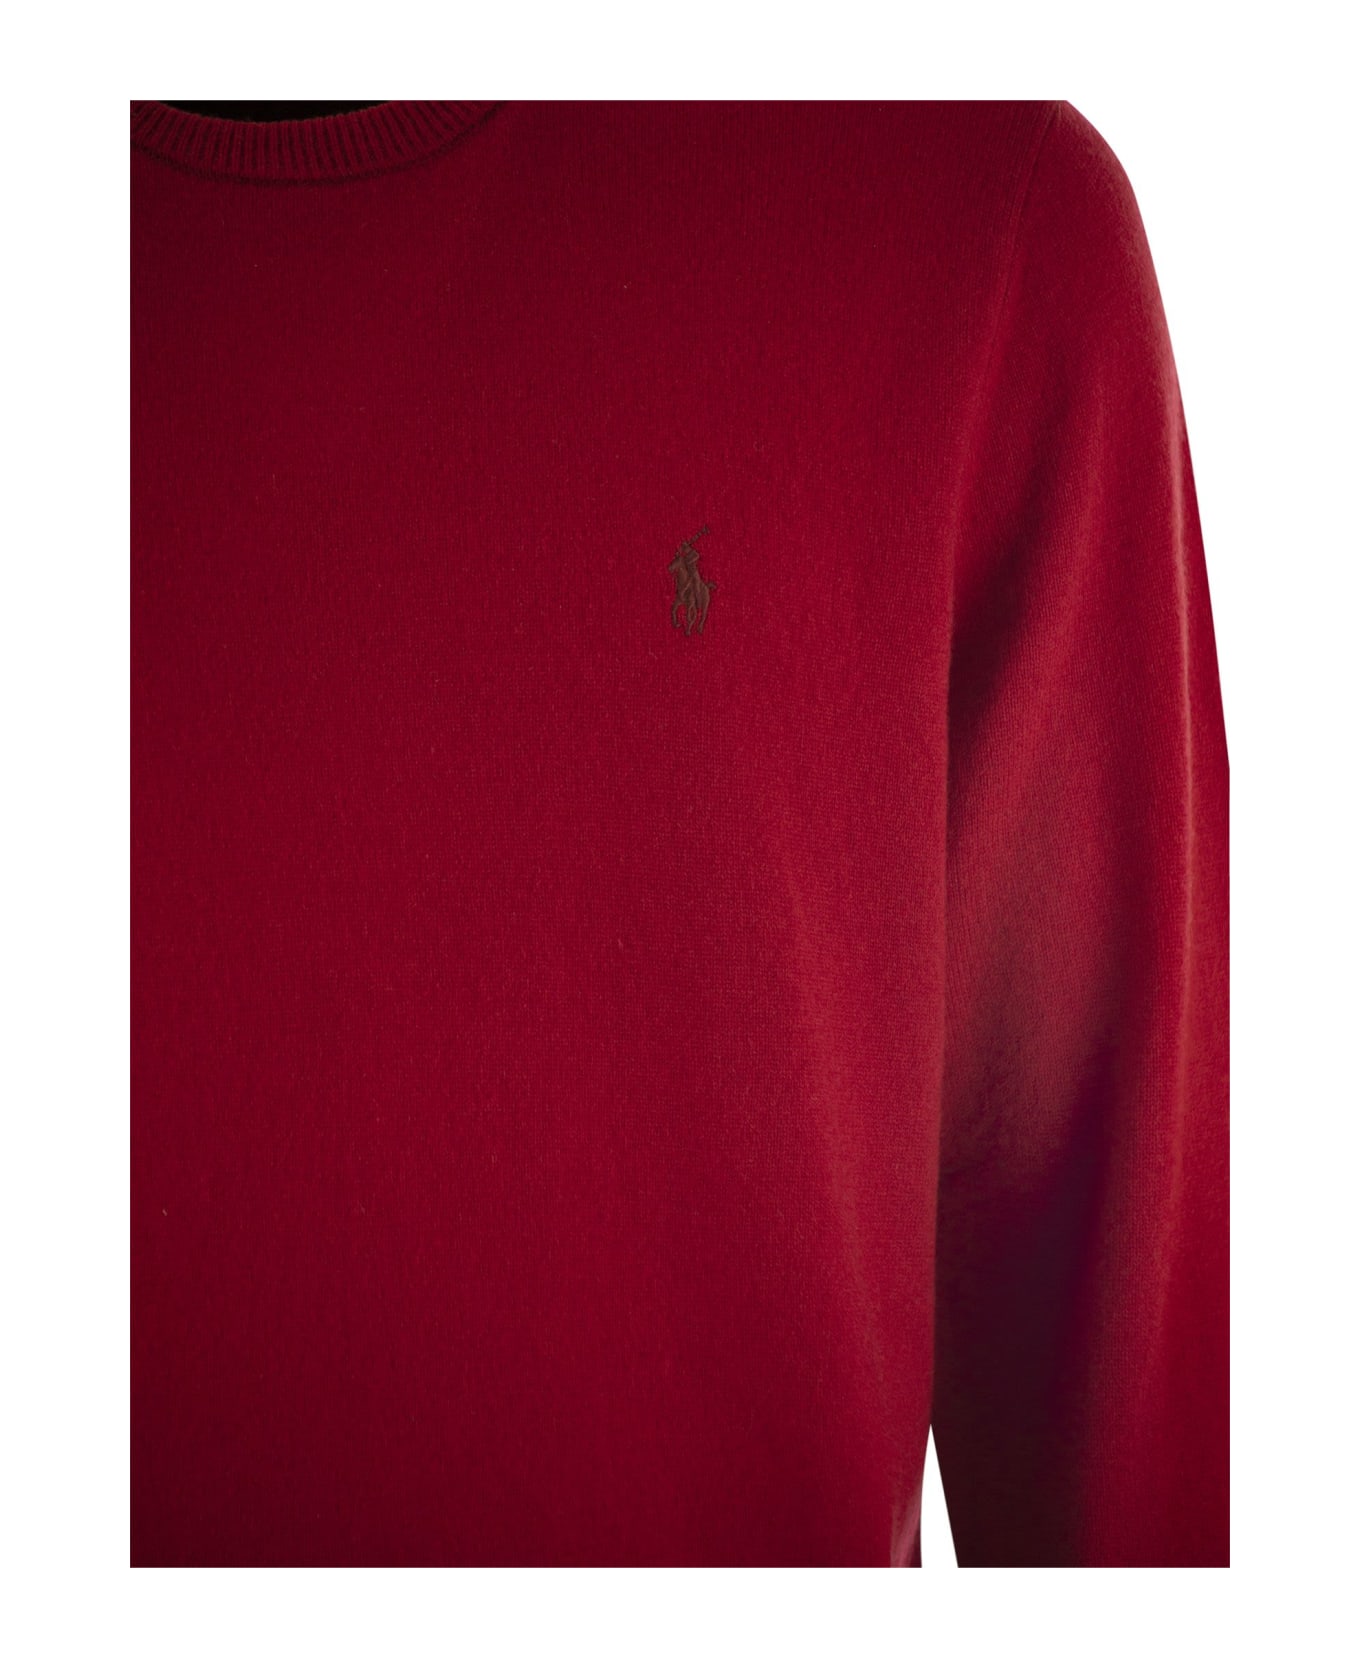 Polo Ralph Lauren Crew-neck Wool Sweater - Red